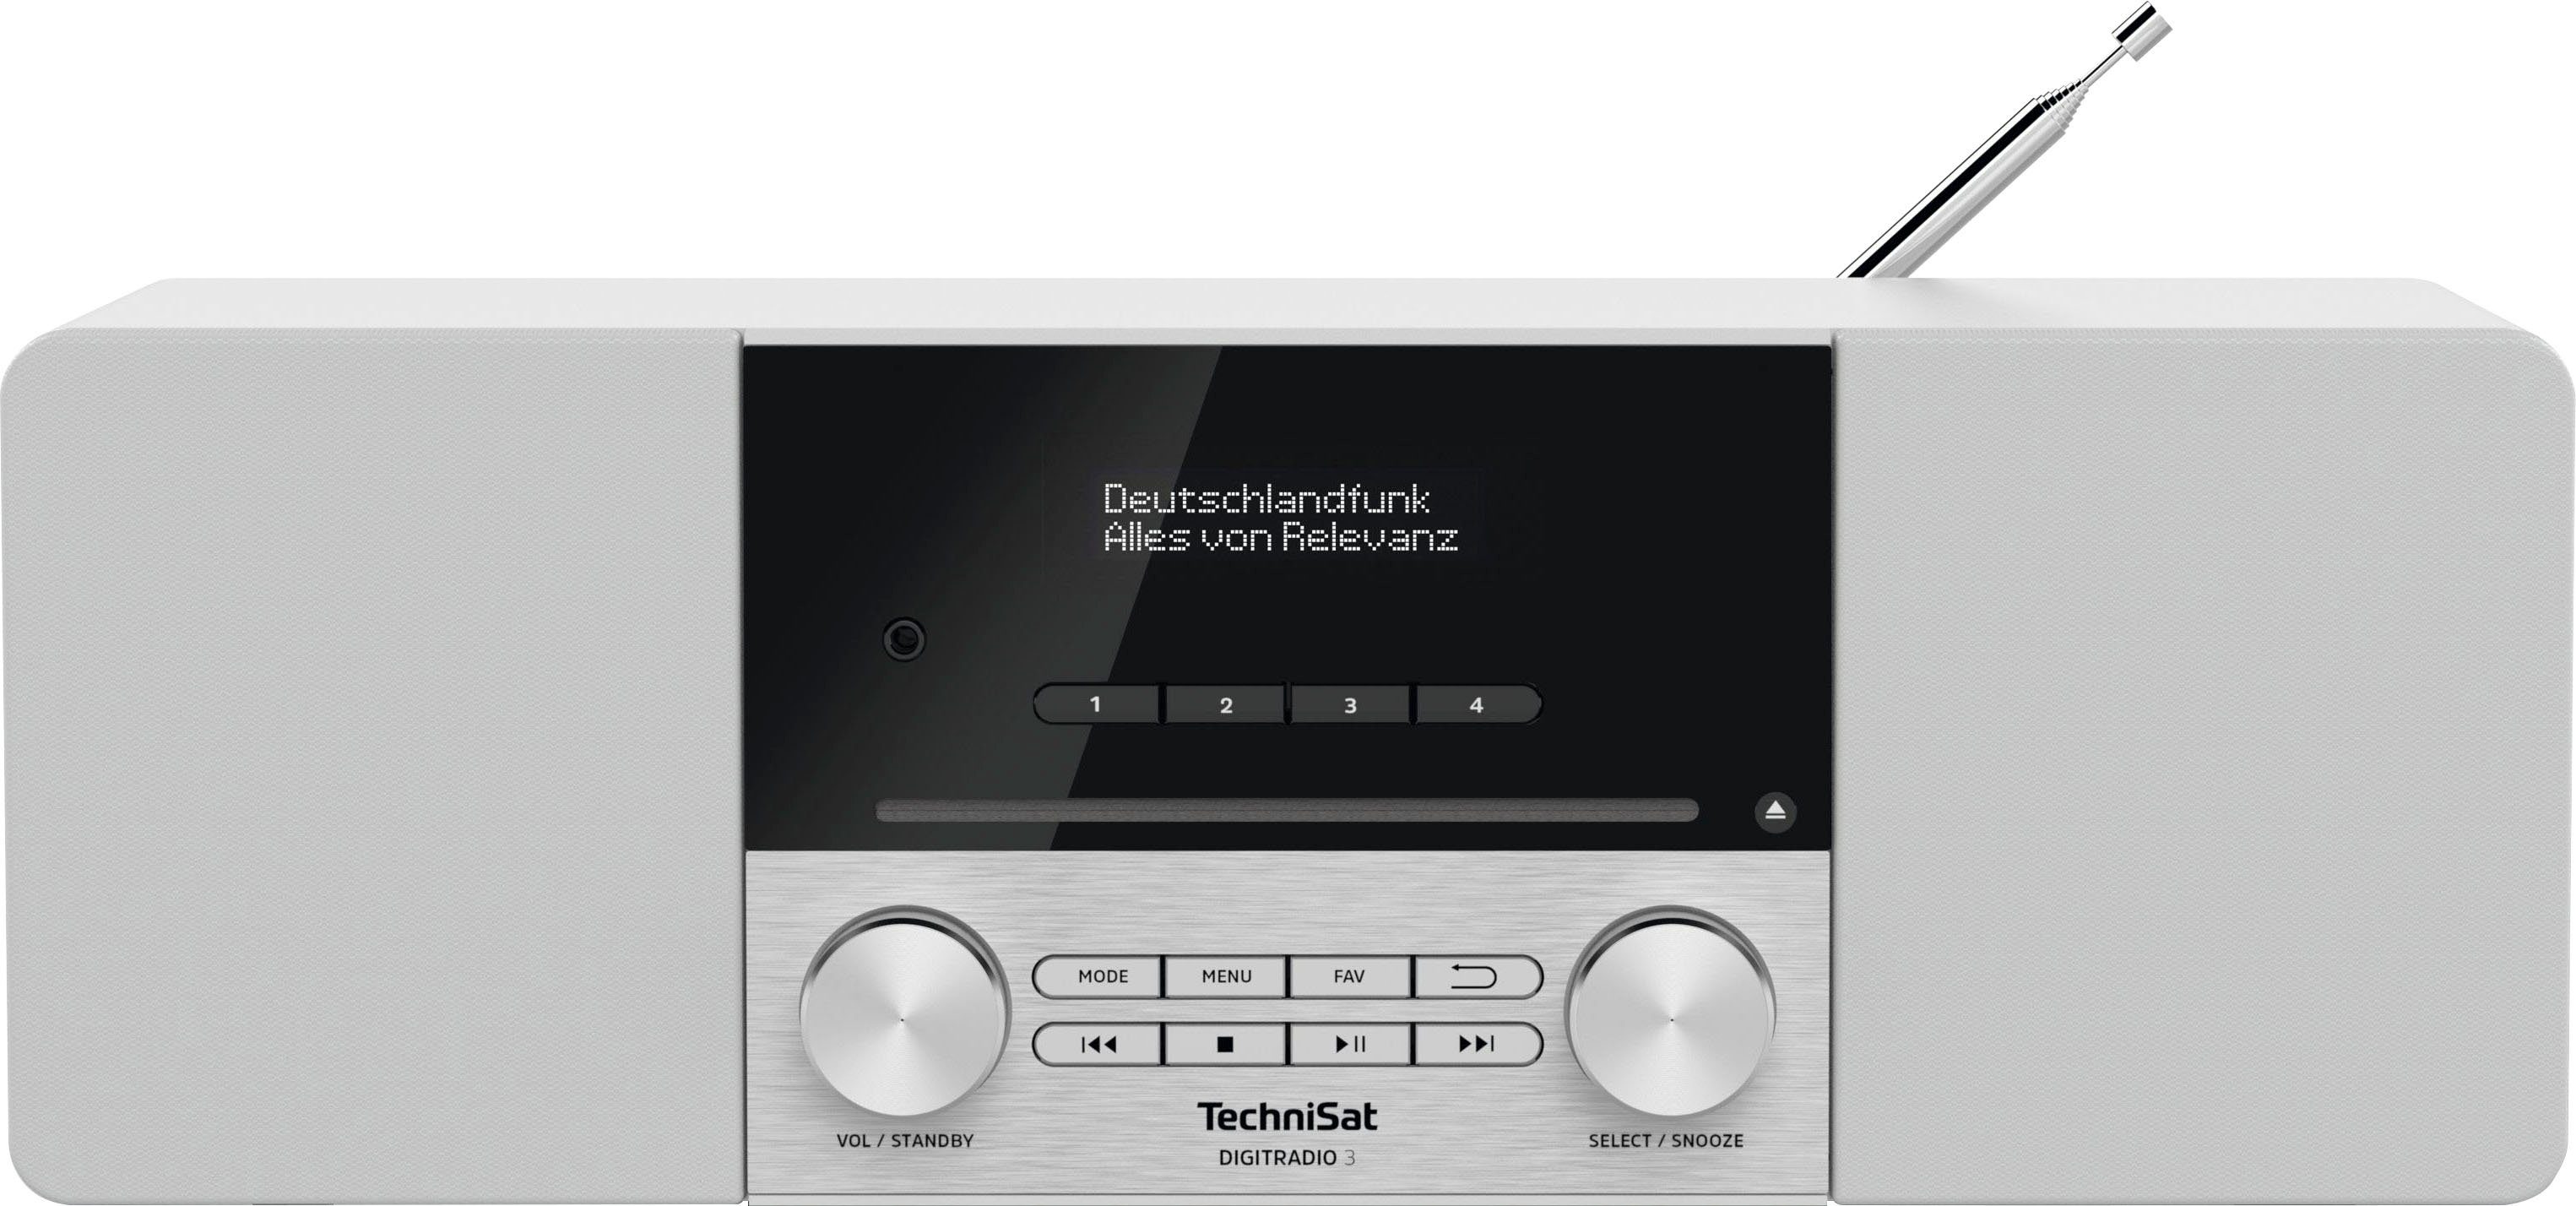 TechniSat DIGITRADIO 3 Digitalradio mit 20 RDS, (Digitalradio weiß W, Germany) (DAB), CD-Player, UKW in (DAB) Made